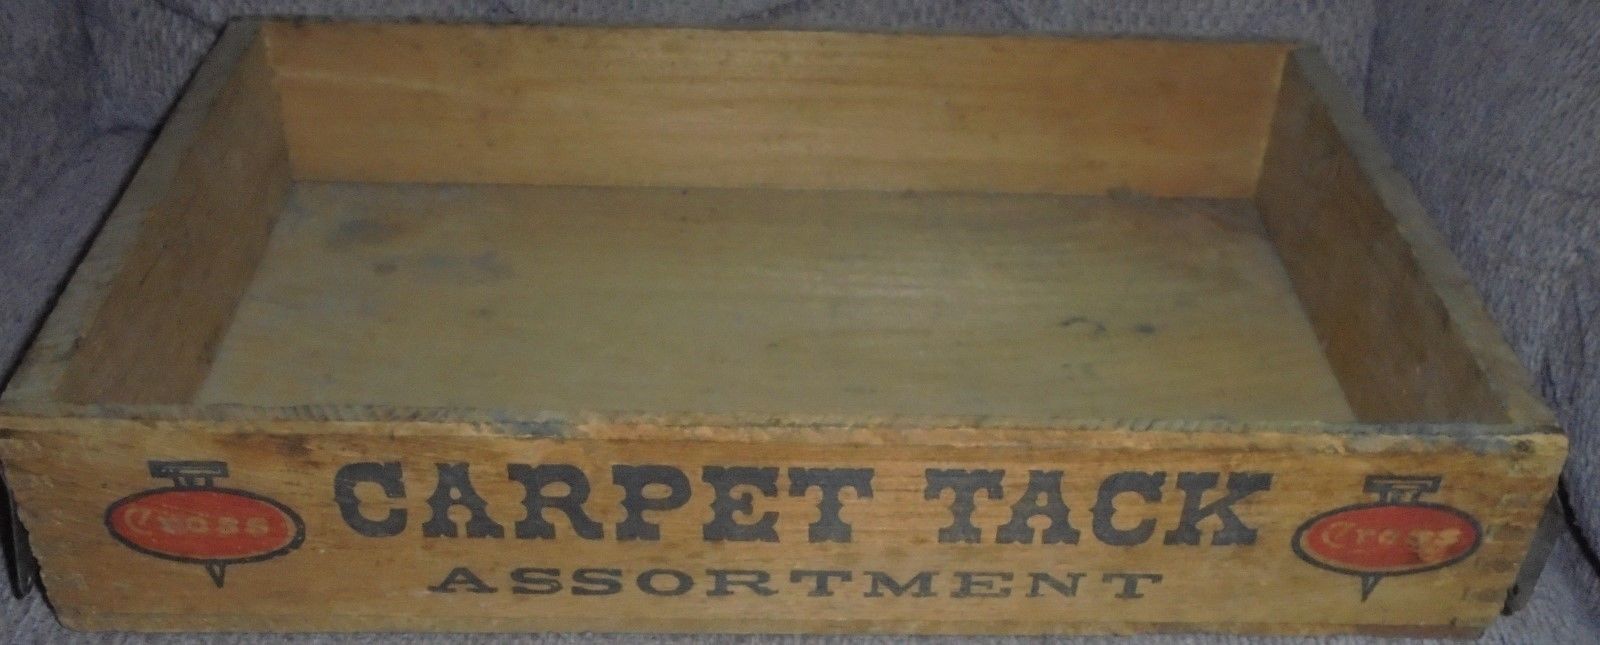 WOOD WOODEN CROSS CARPET ASSORTMENT TACKS CRATE BOX ADVERTISING